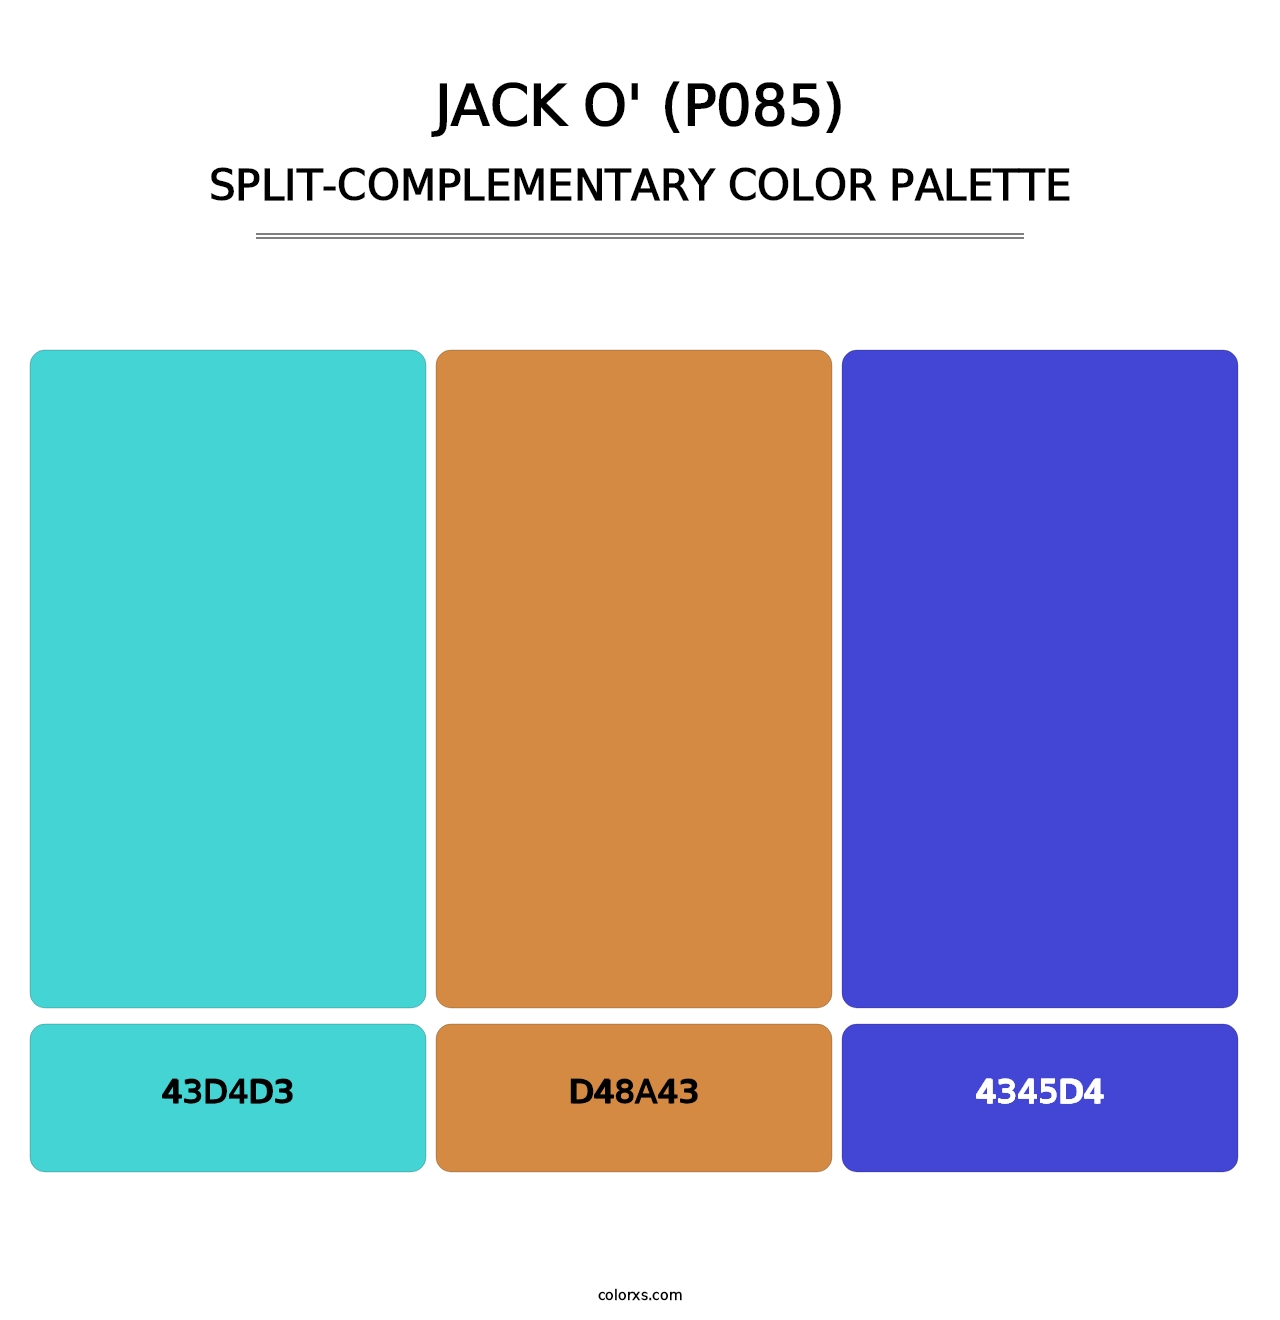 Jack O' (P085) - Split-Complementary Color Palette